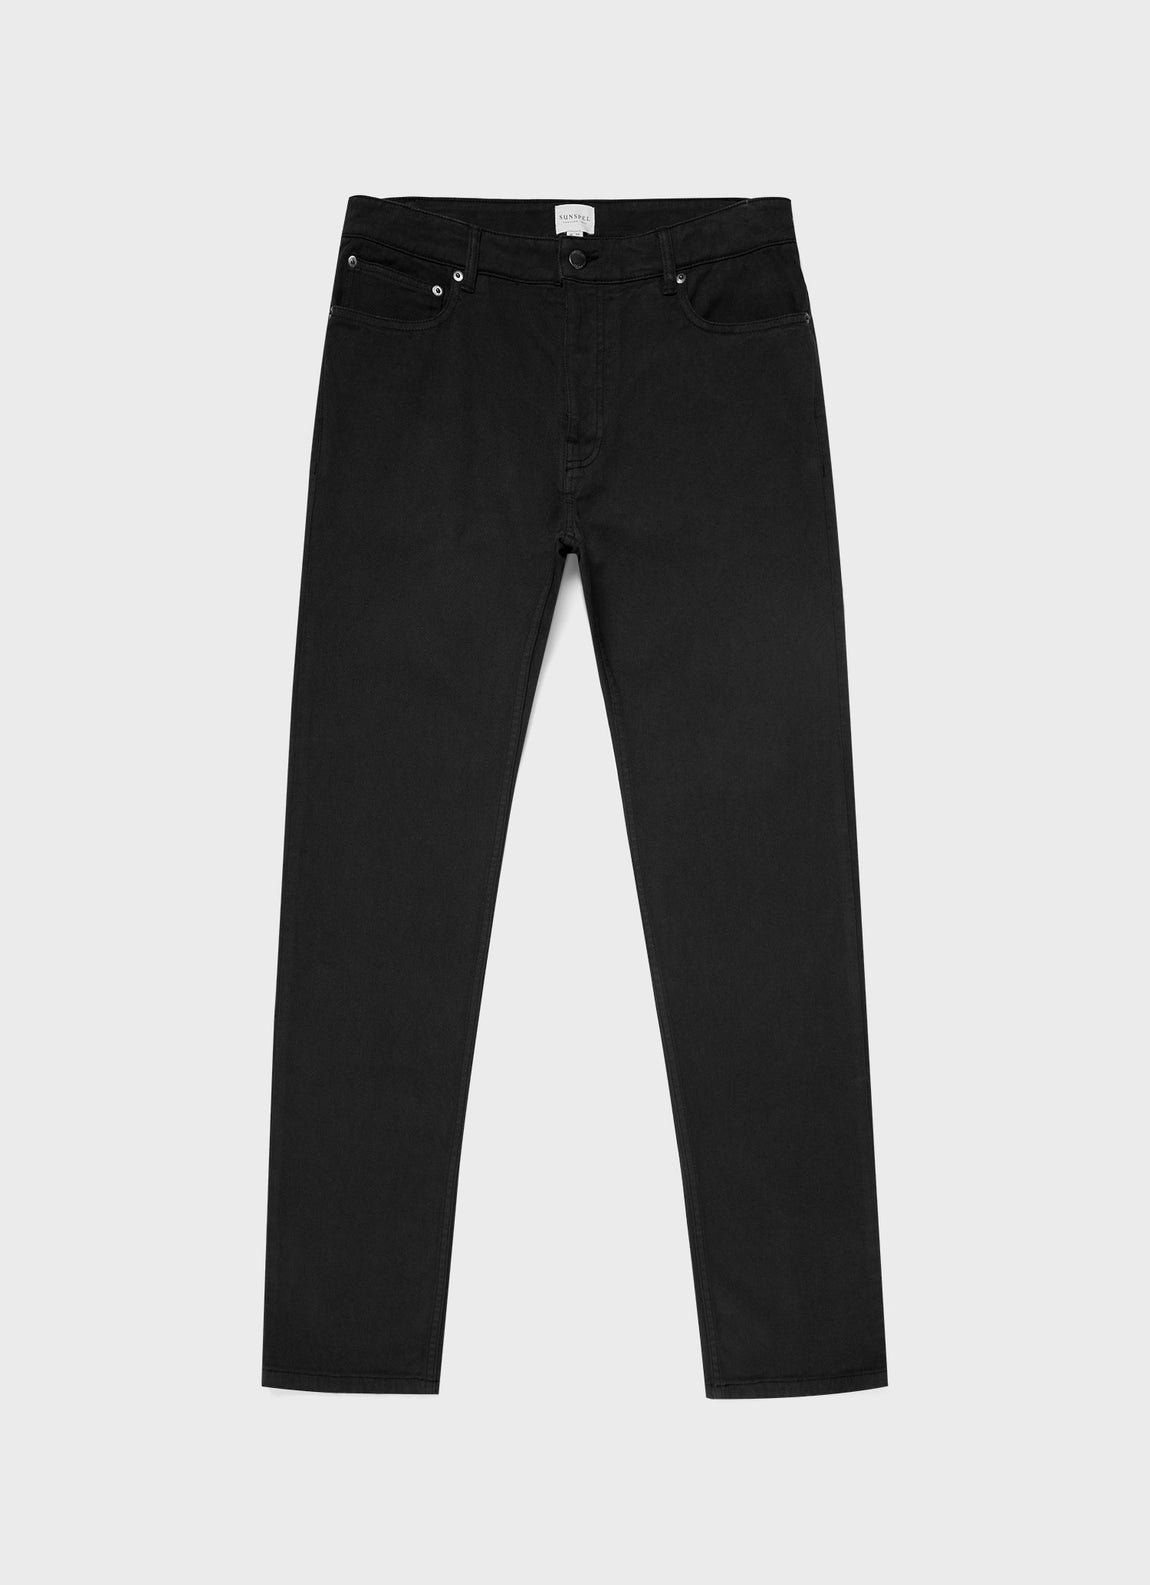 Men's Cotton Drill 5 Pocket Trouser in Black | Sunspel